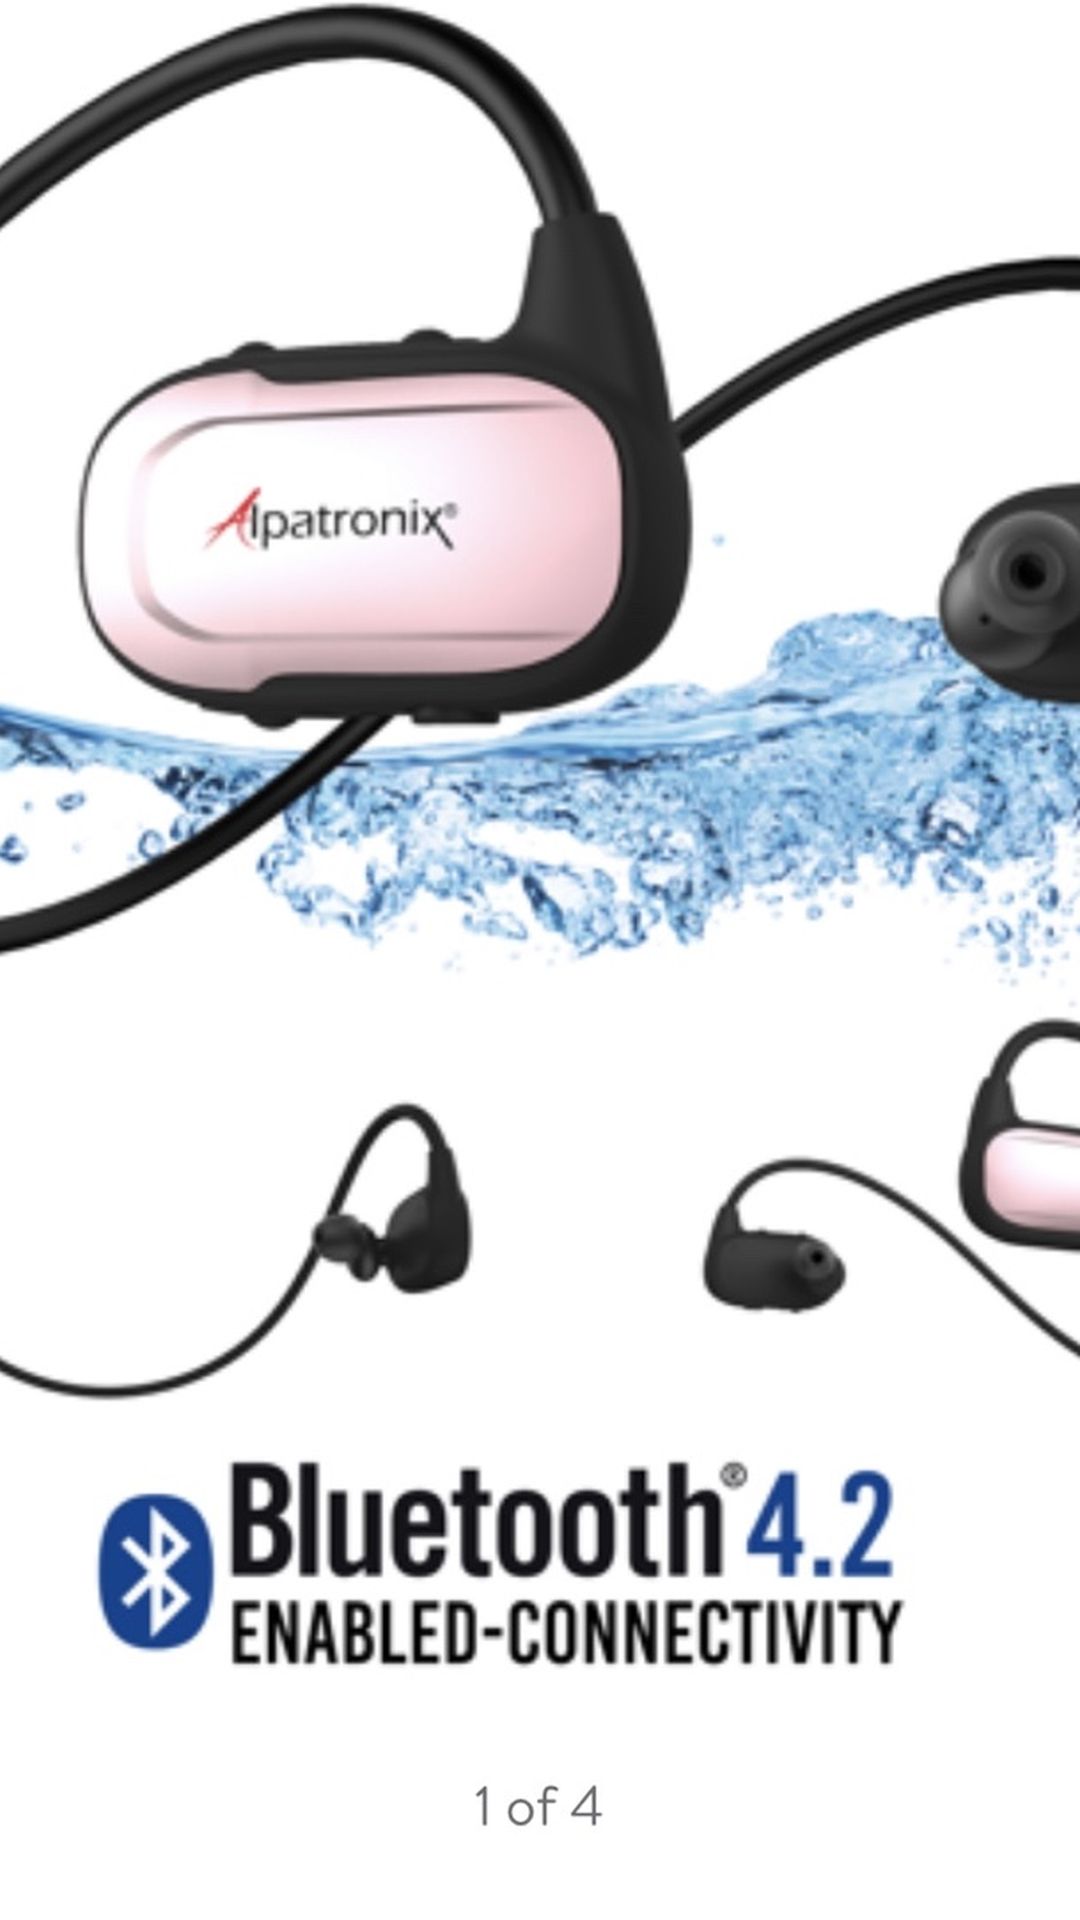 Alpatronix HX250 Waterproof Bluetooth Earbuds